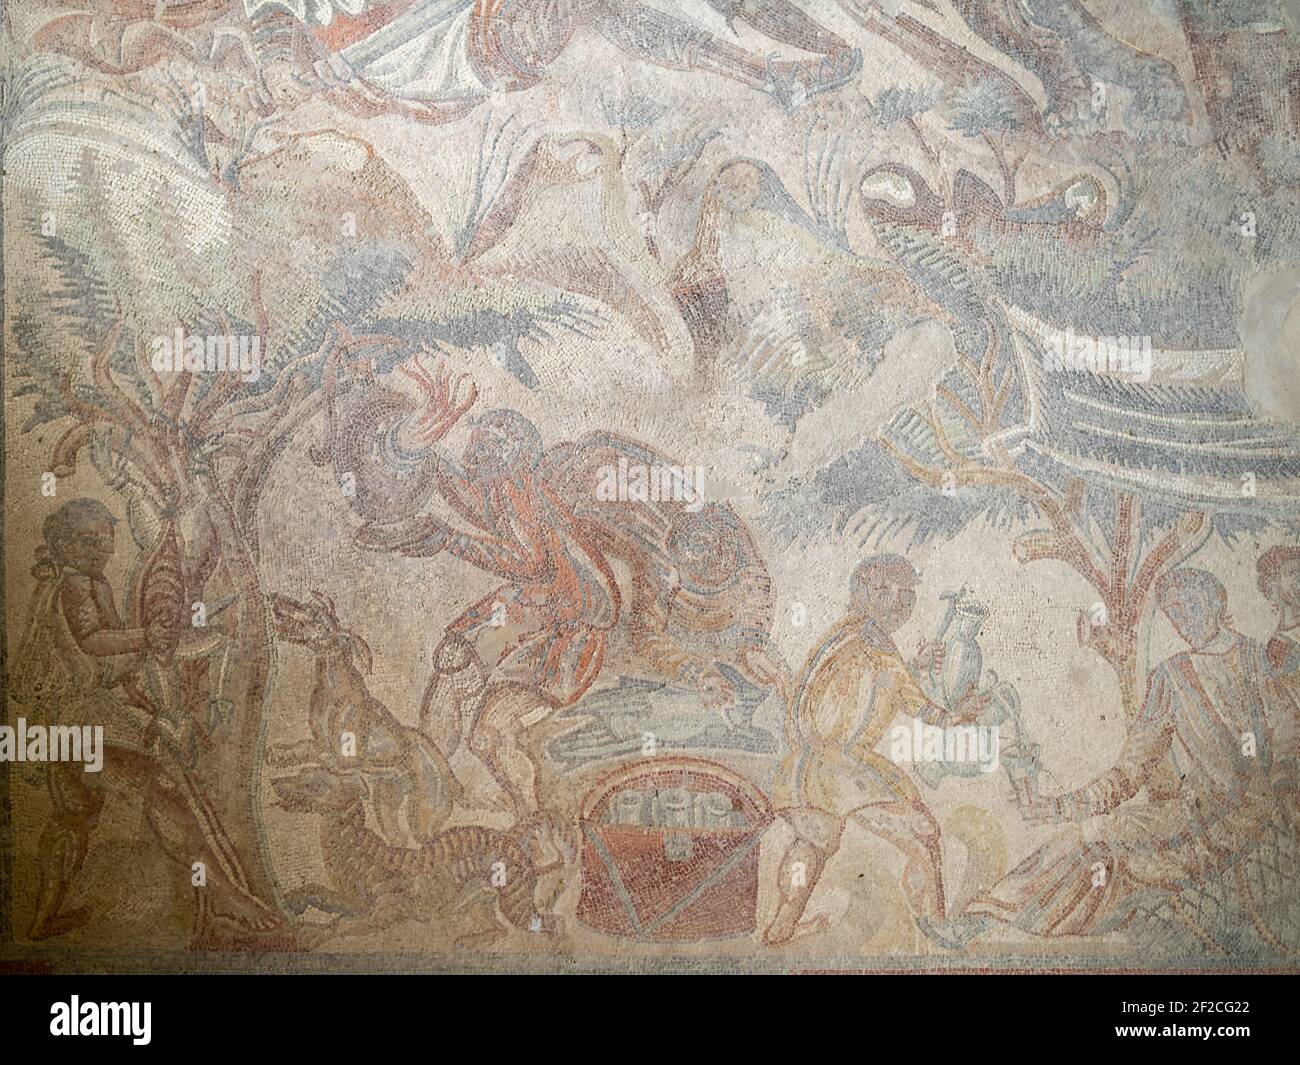 Détail de la mosaïque de chasse de la Villa Romana del Tellaro Banque D'Images